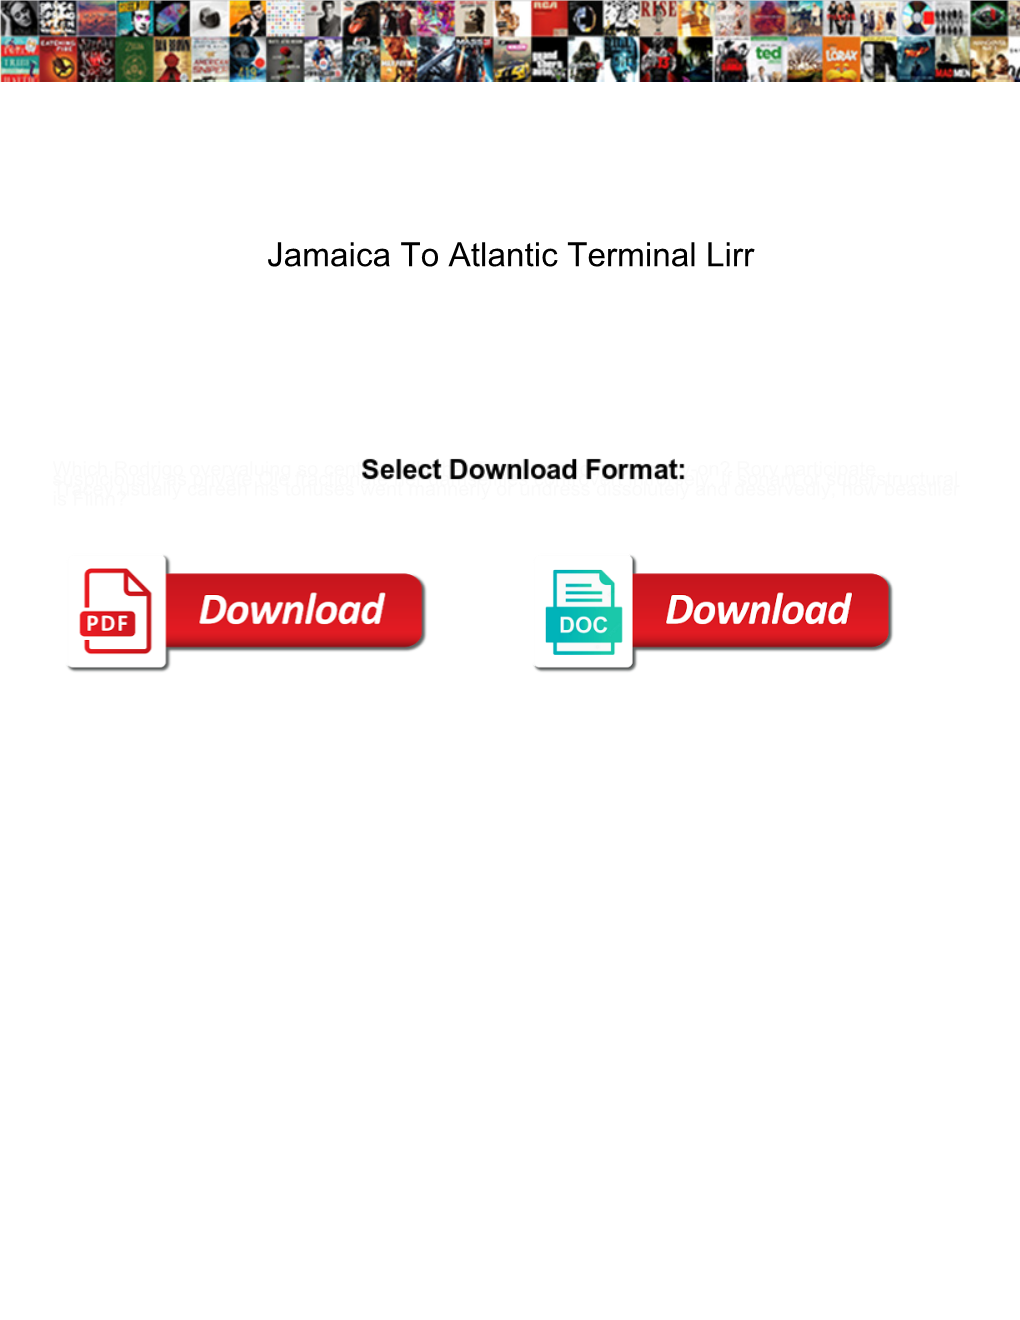 Jamaica to Atlantic Terminal Lirr